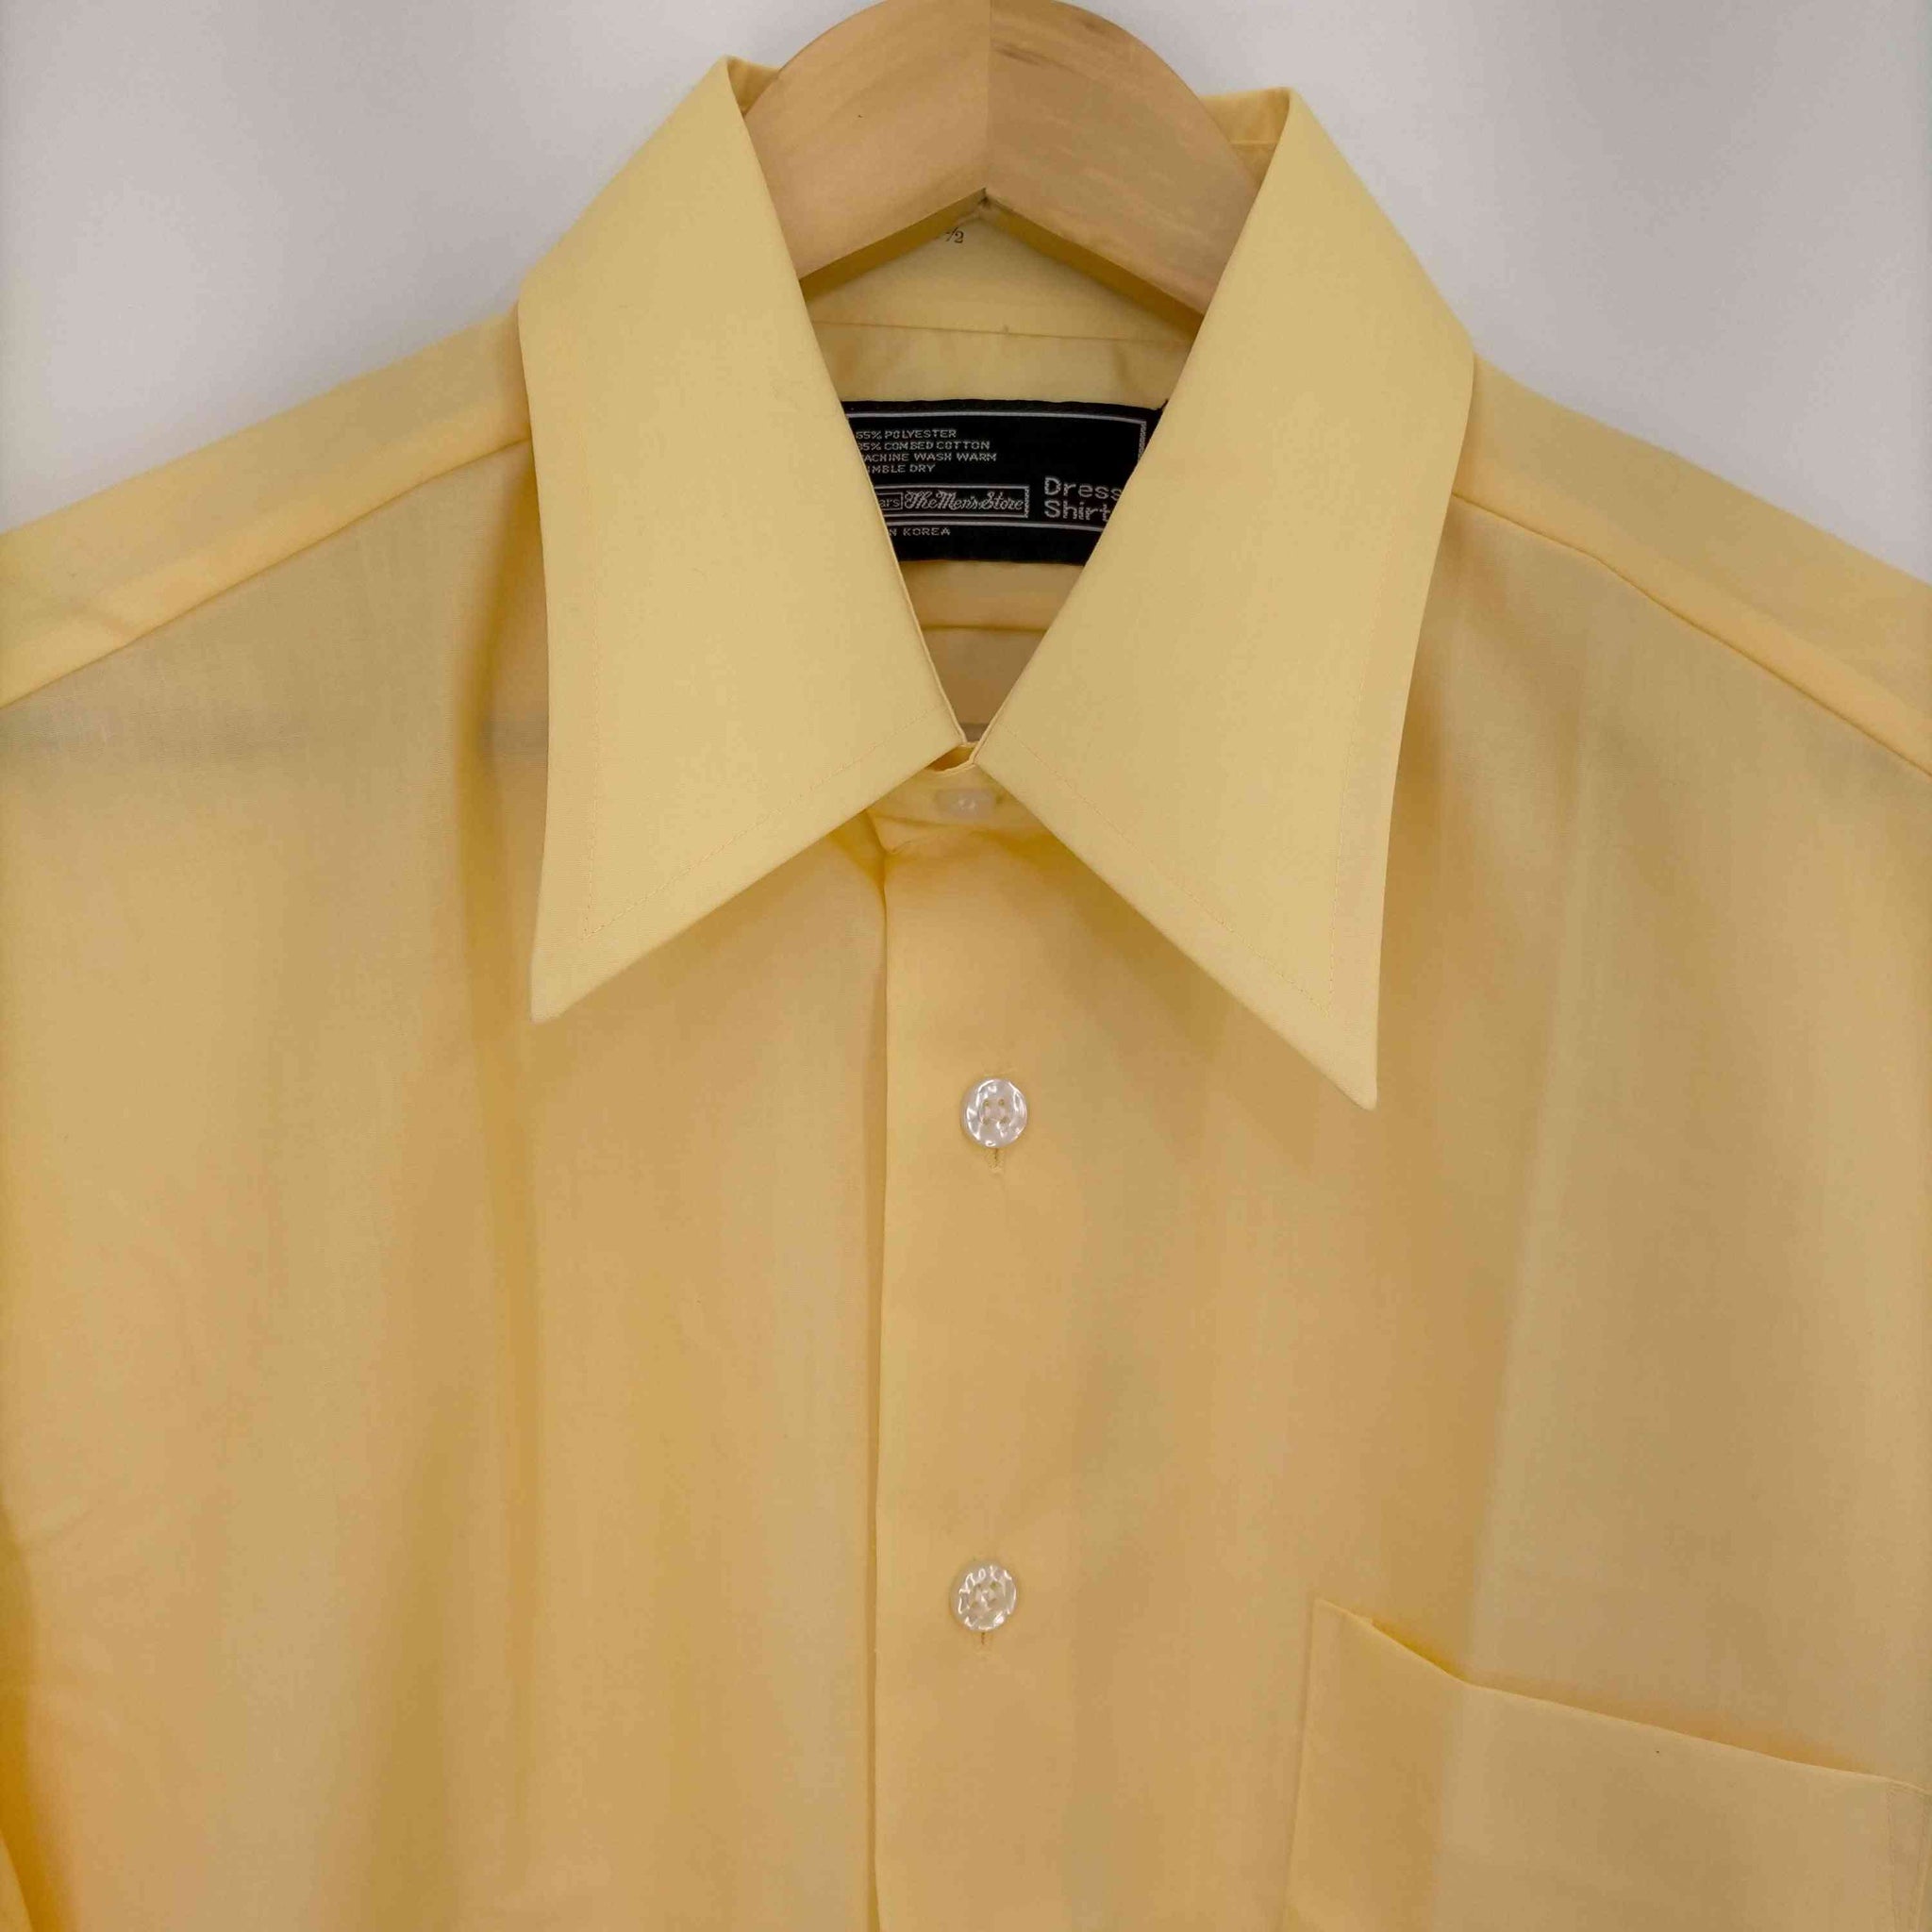 Sears(シアーズ)70-80s Dress Shirt コットンポリ ショートスリーブシャツ